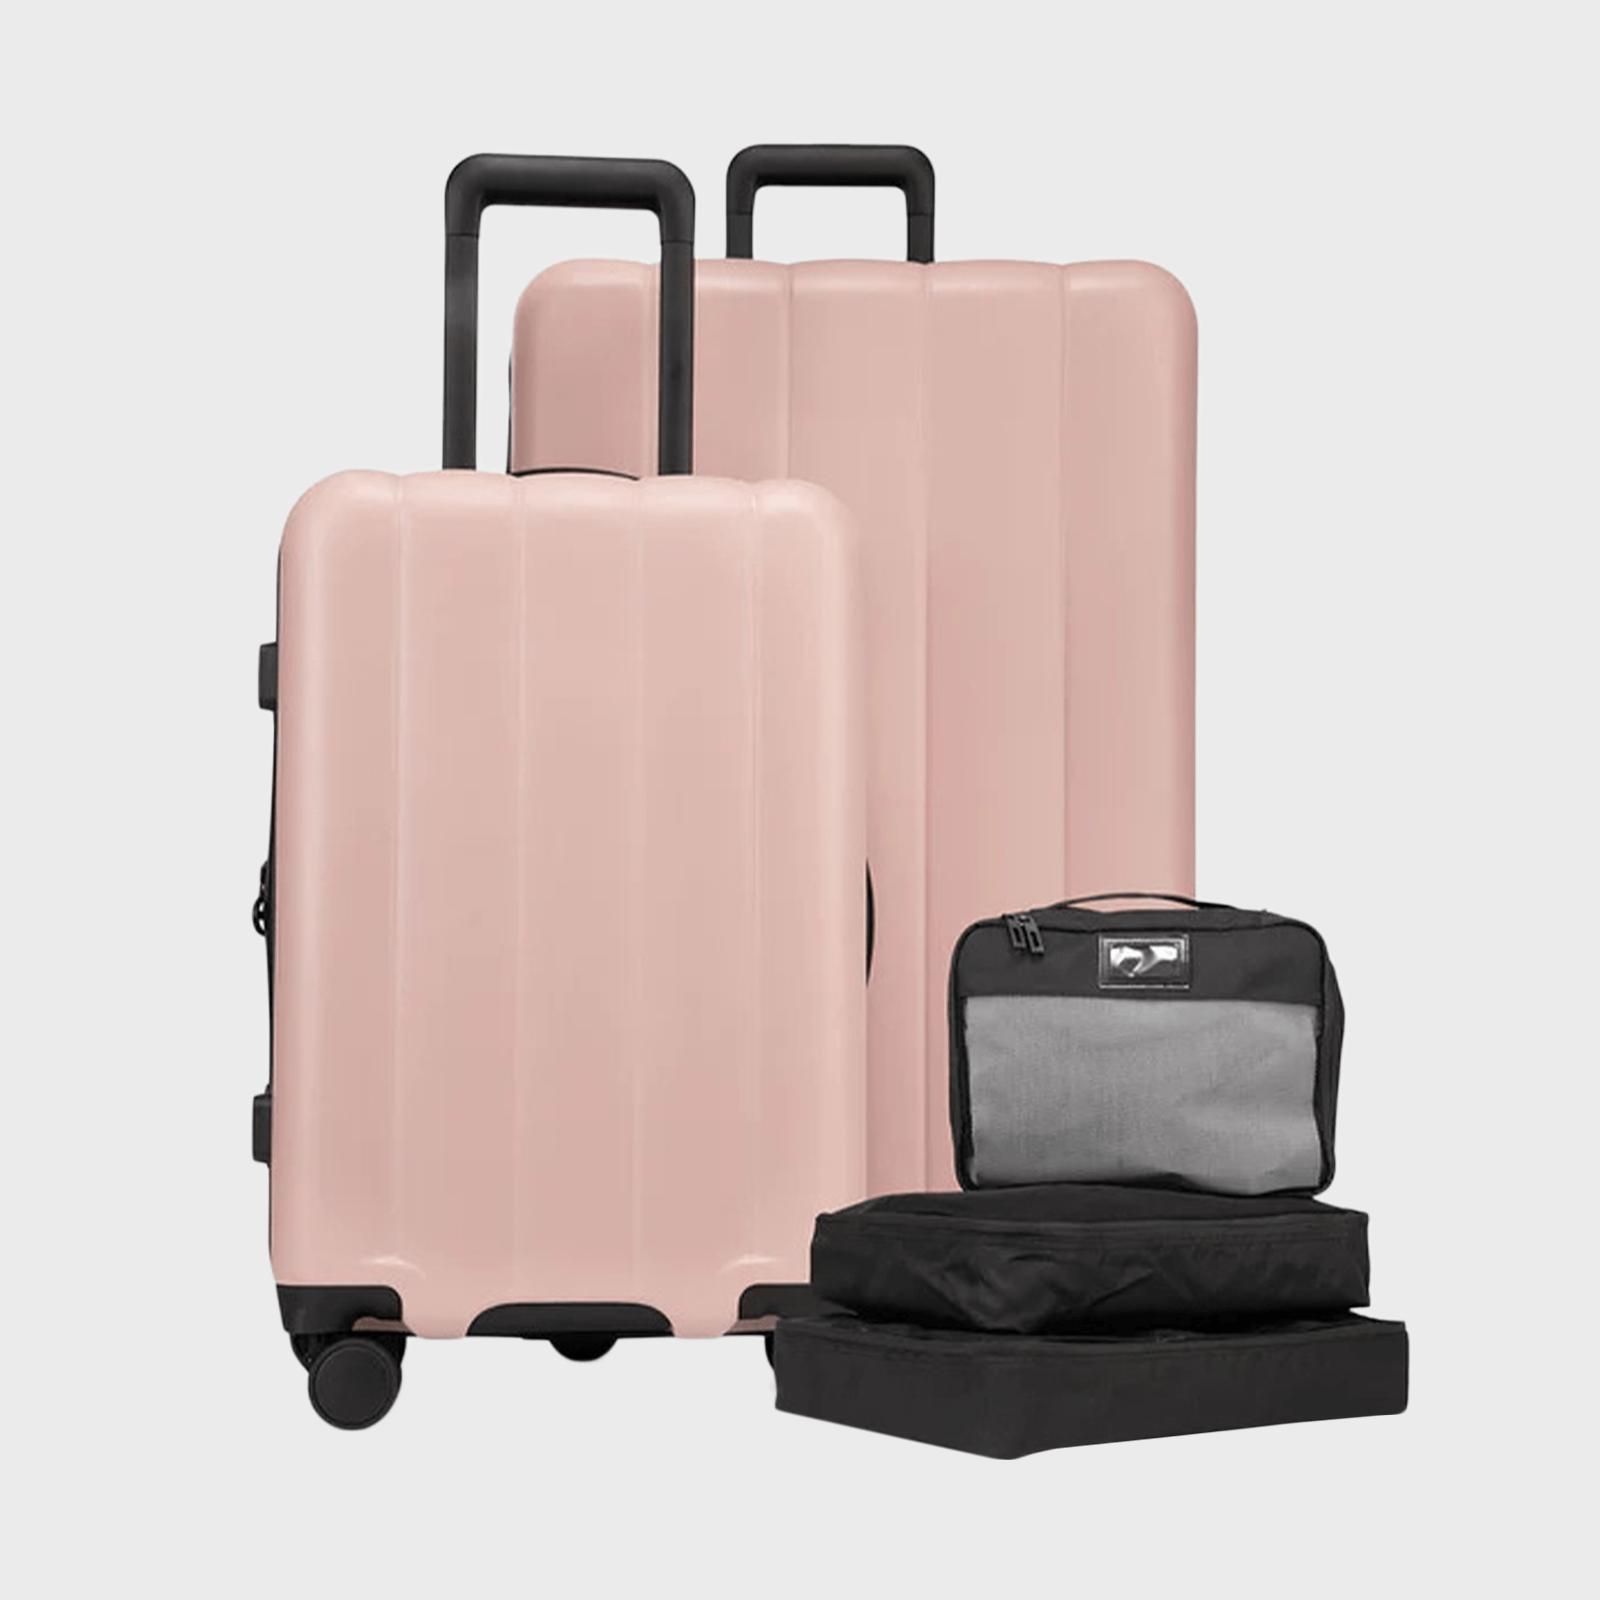 Safari Faux Leather Hard Trolley Luggage Bags ( Small + Medium + Large )  with 360 Rotation 4 Wheel Suitcase -Blue- Set of 3 : : Fashion